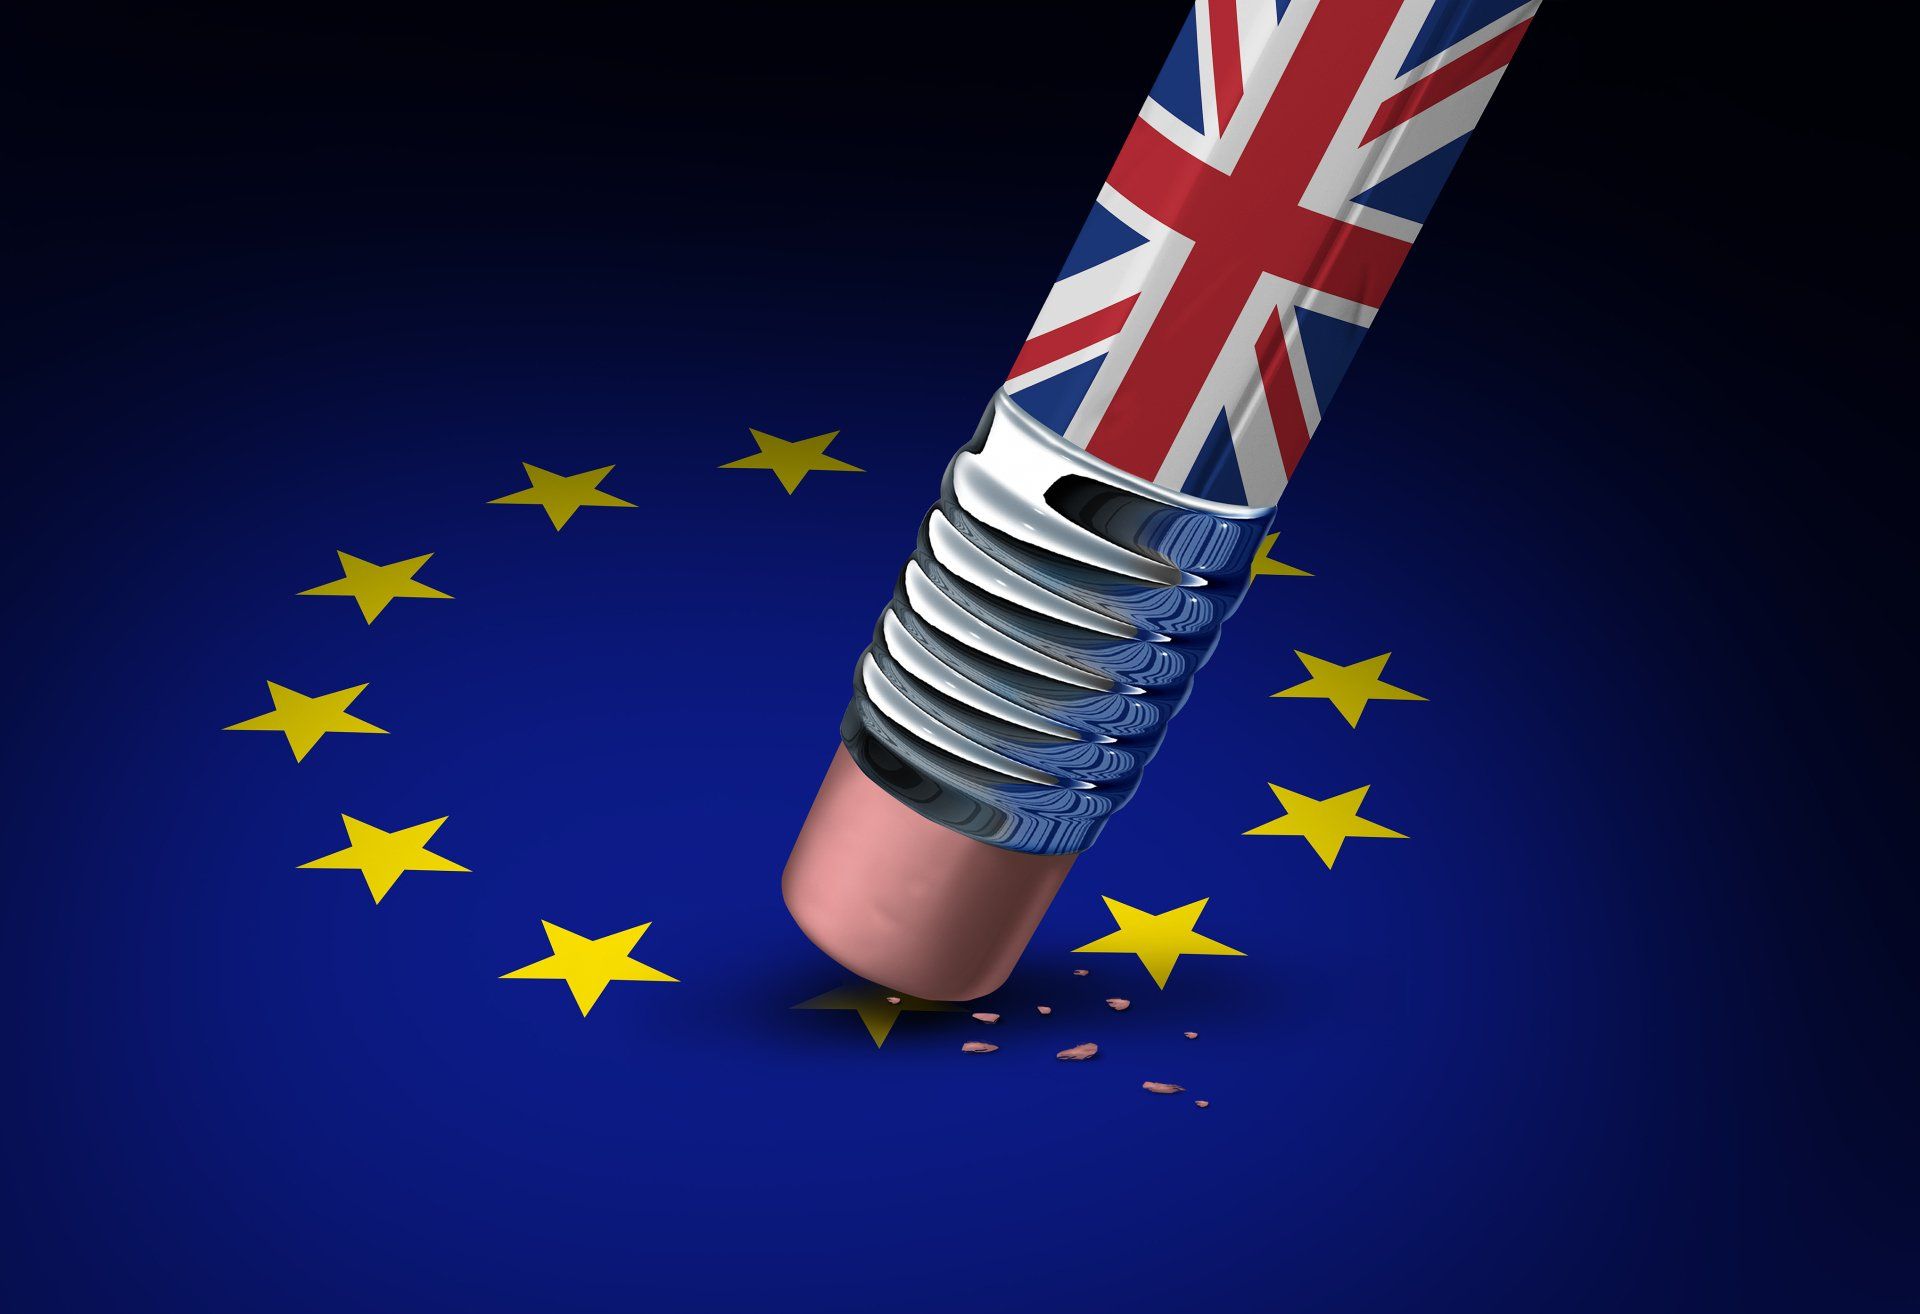 UK pencil rubbing out EU star